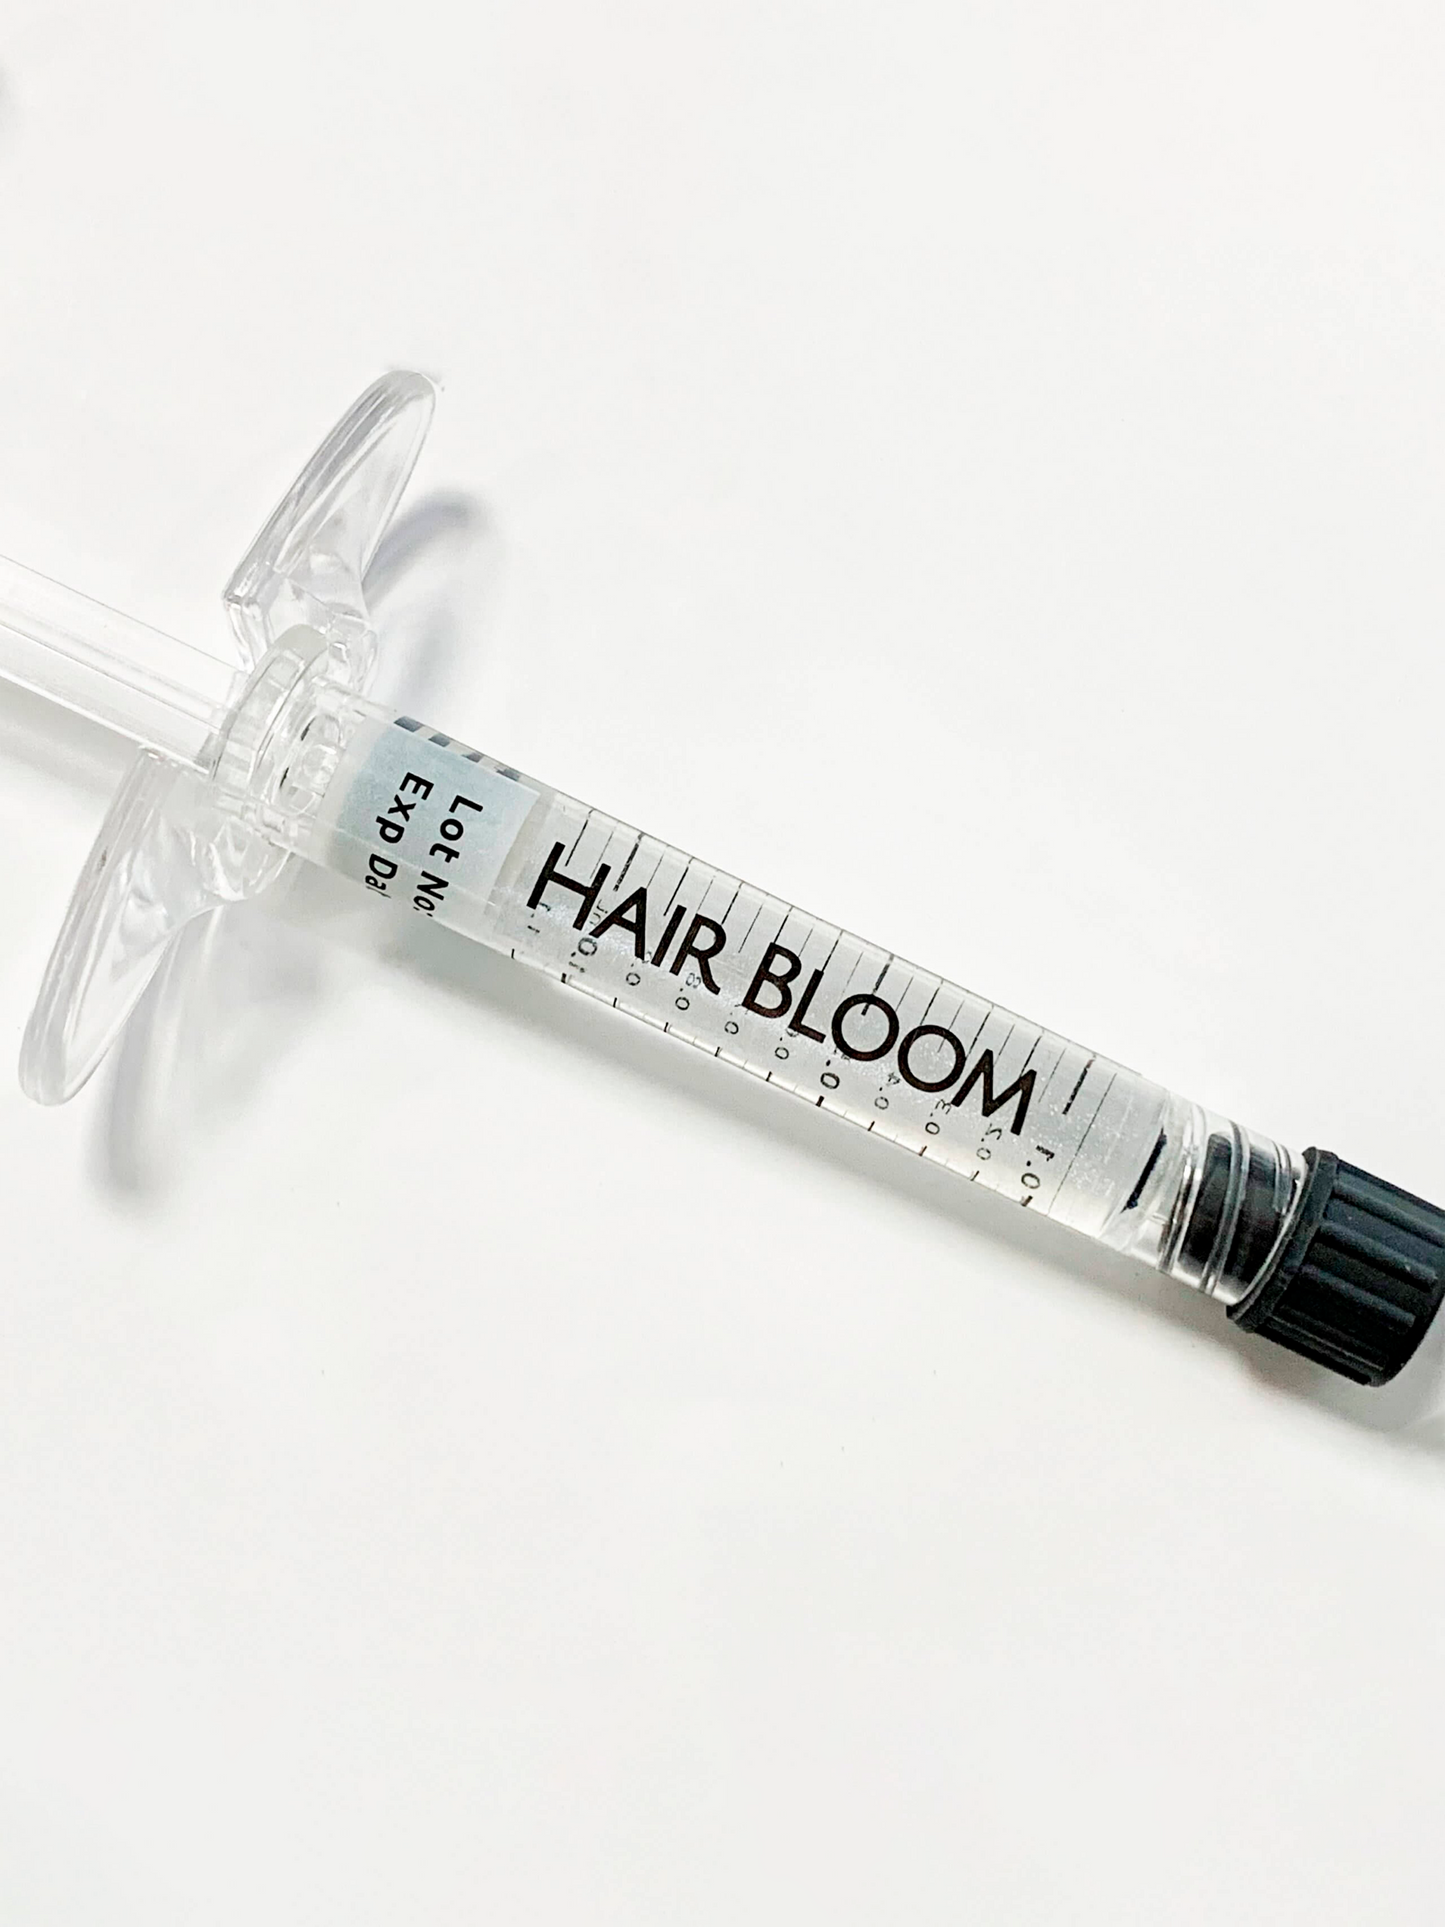 Hair Bloom (Estimulador aumento de cabello)